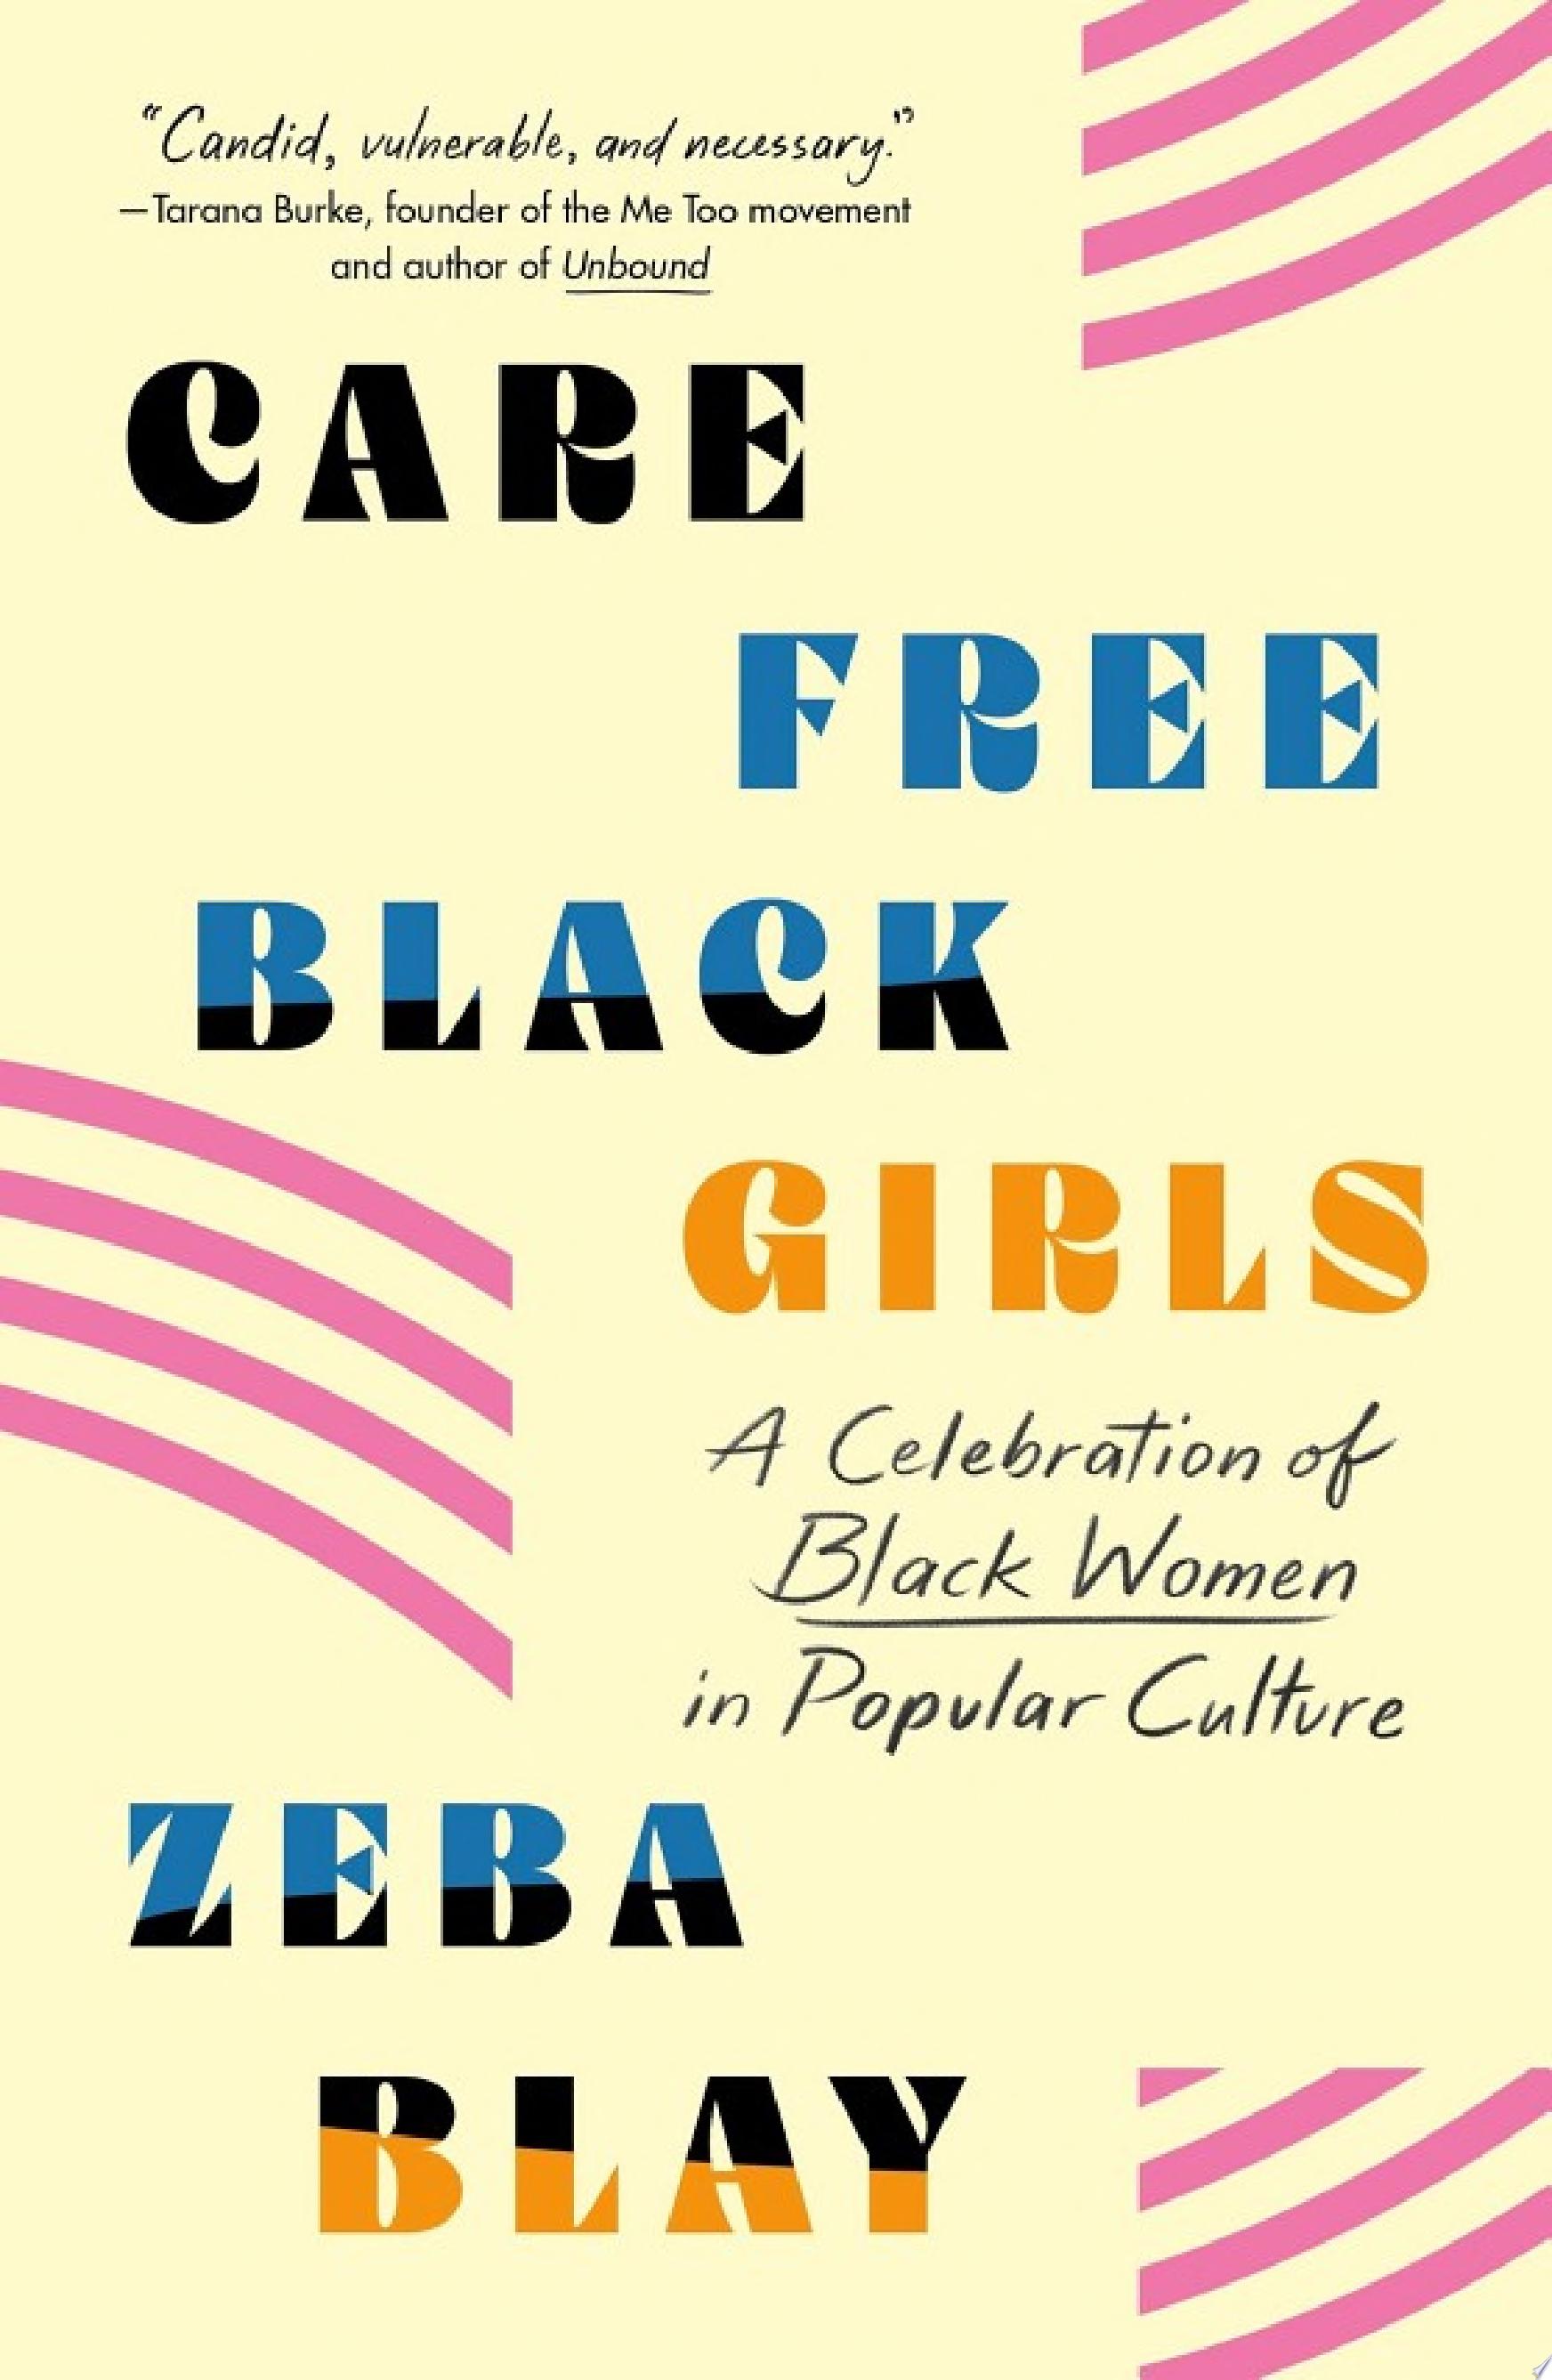 Image for "Carefree Black Girls"